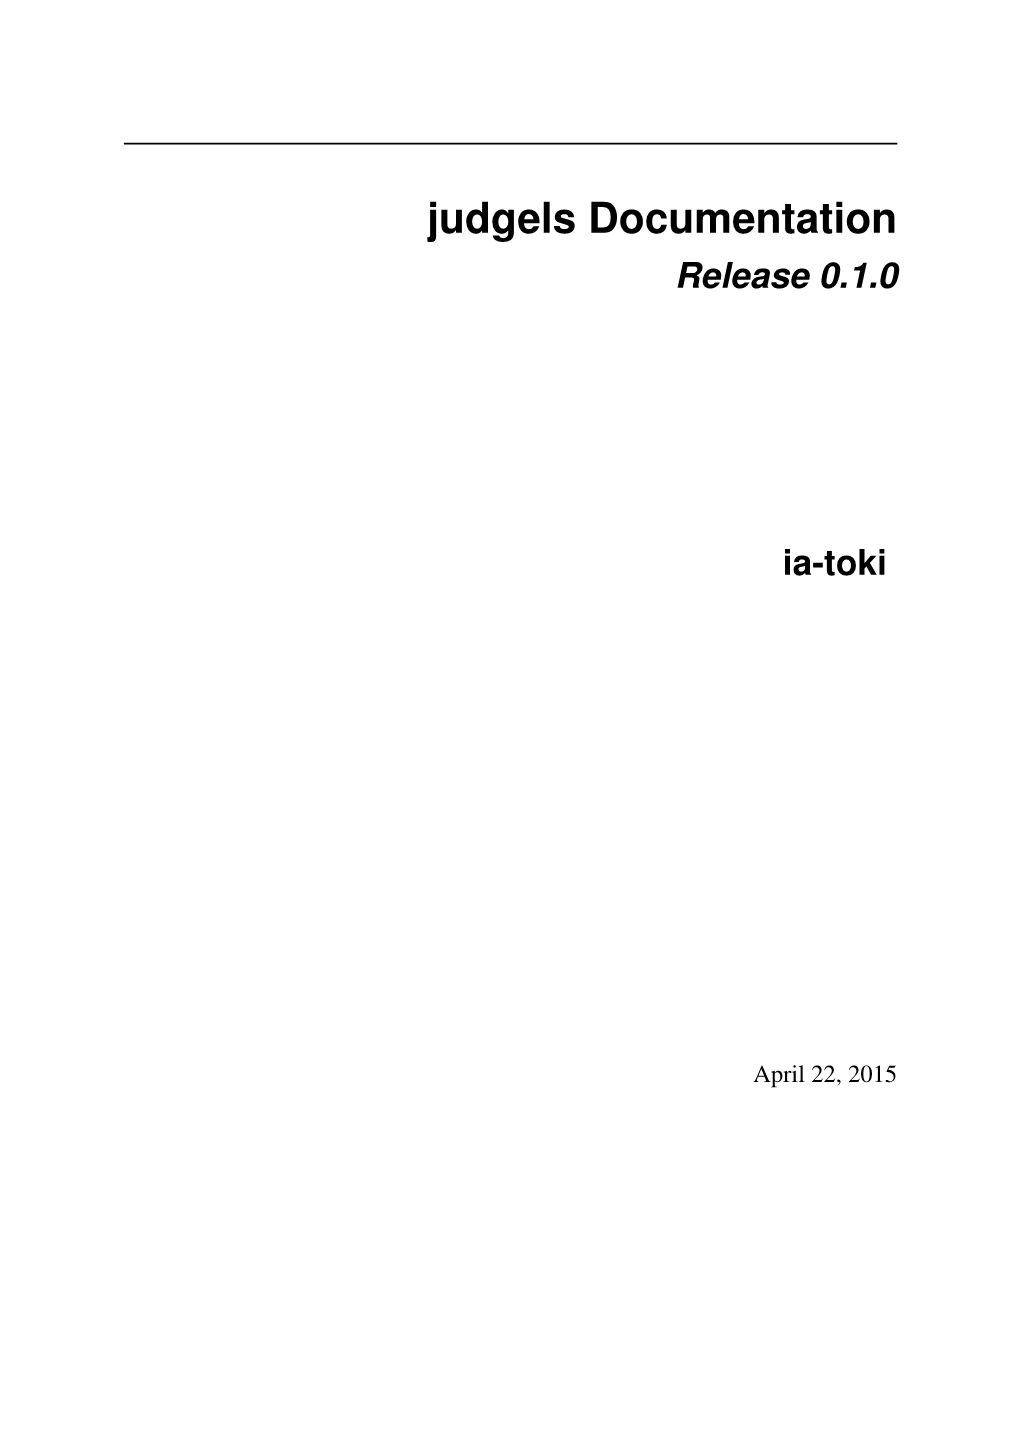 Judgels Documentation Release 0.1.0